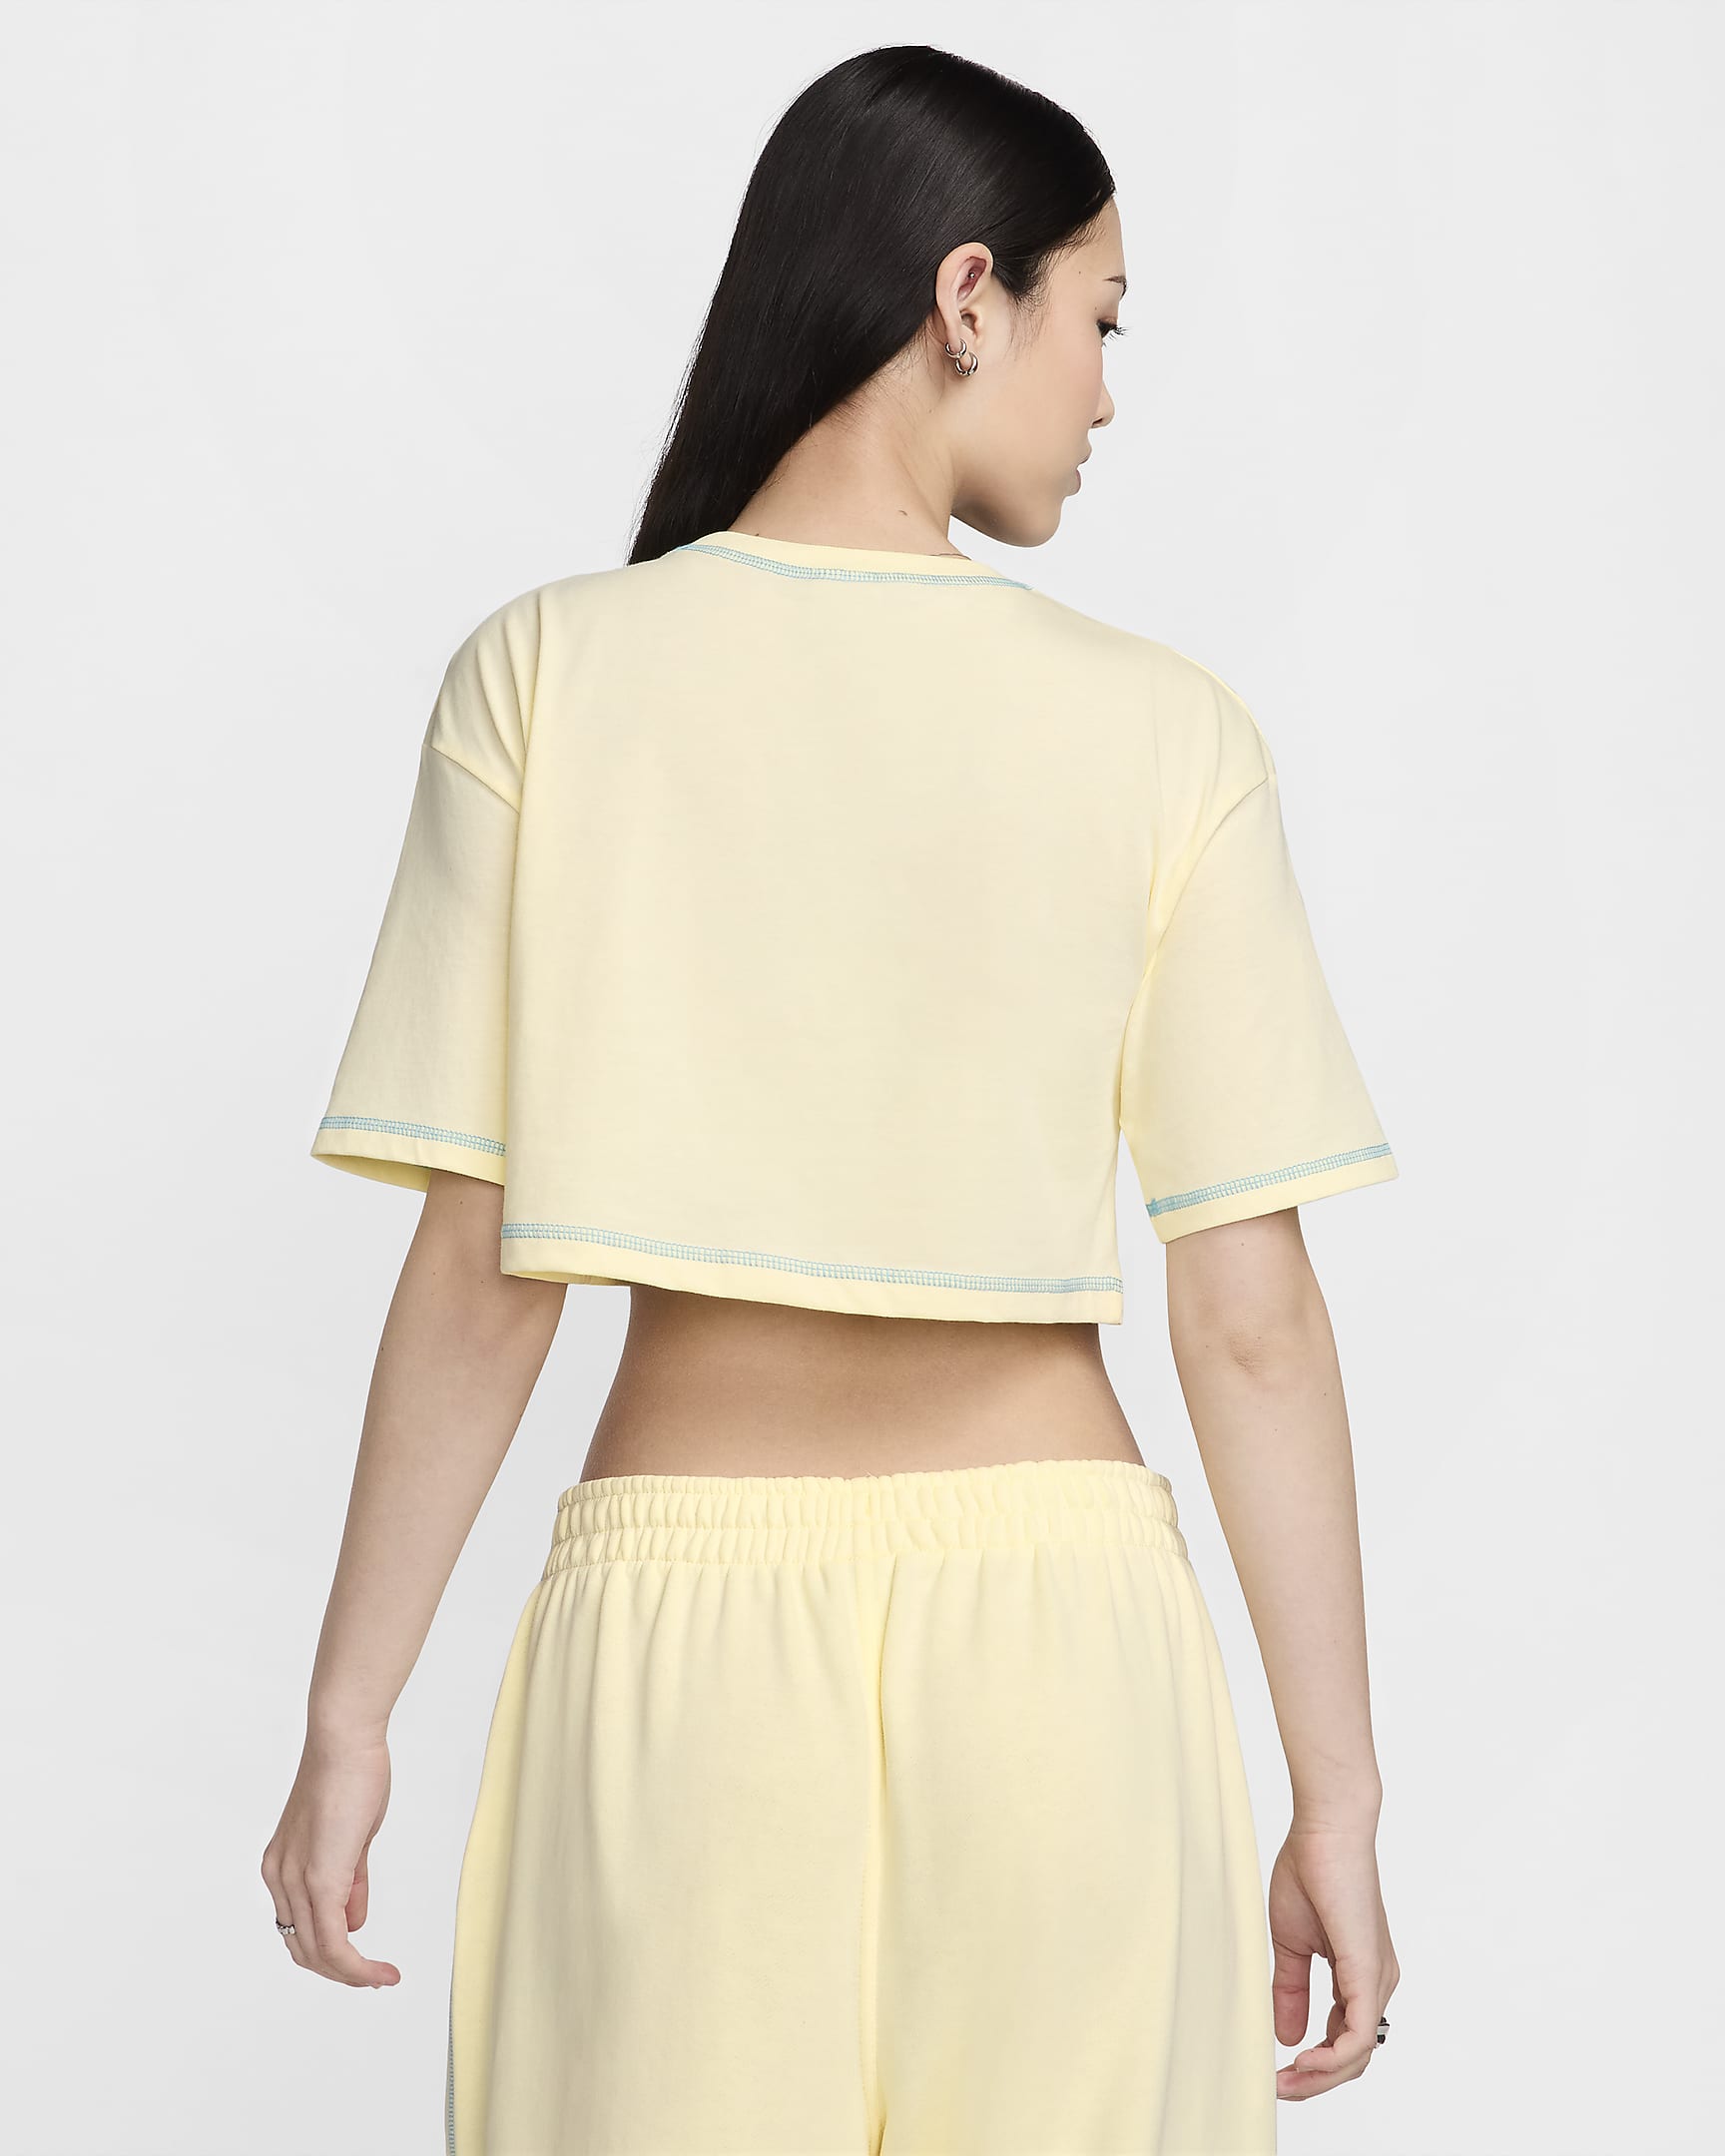 Nike Sportswear Women's Cropped T-Shirt - Alabaster